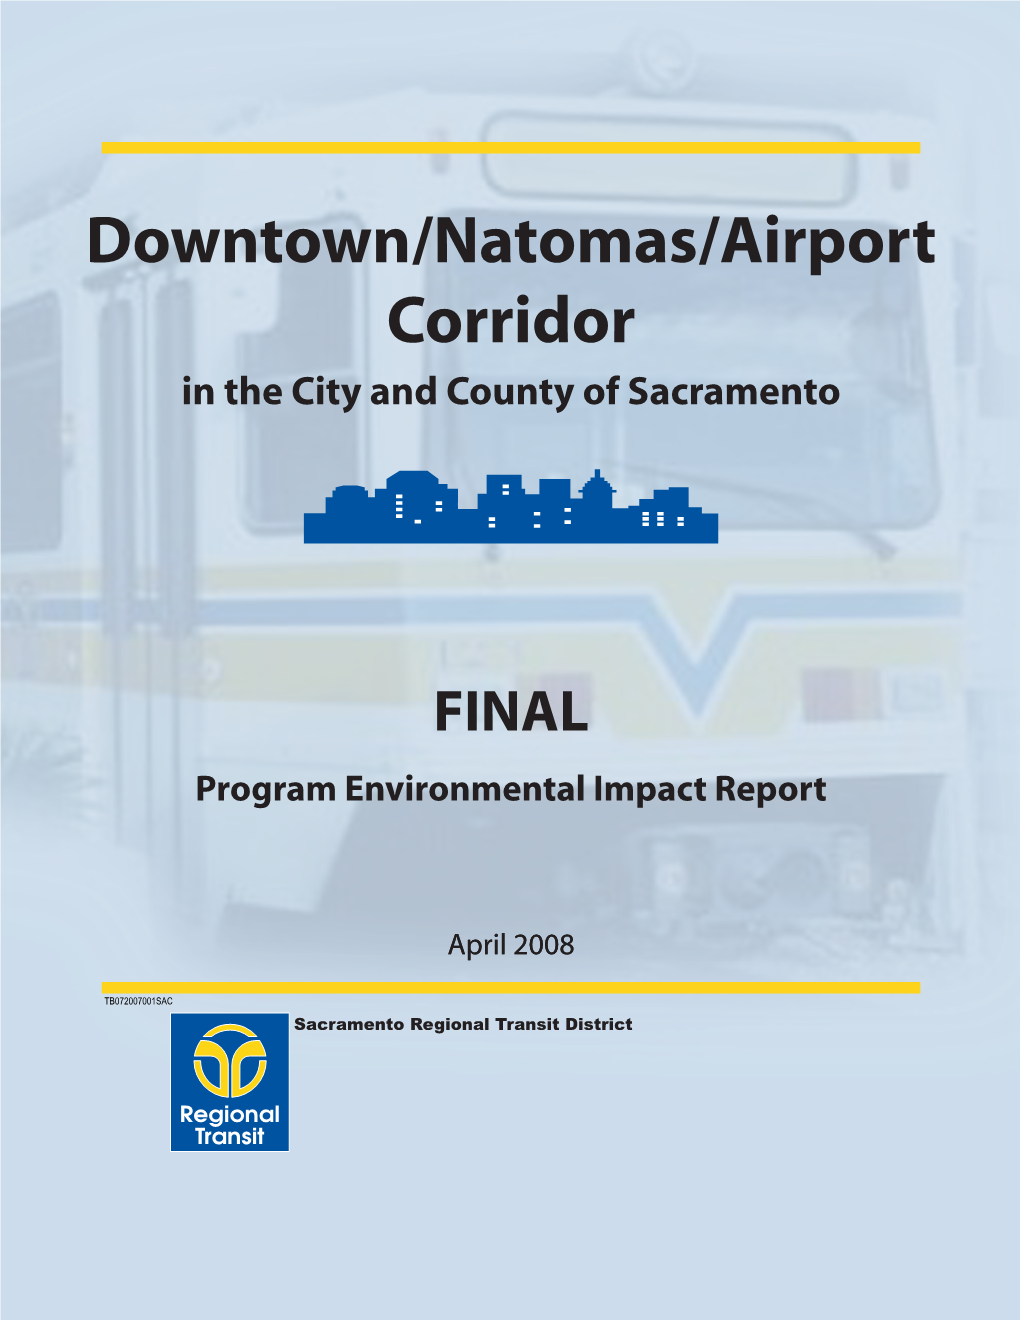 FINAL Program Environmental Impact Report